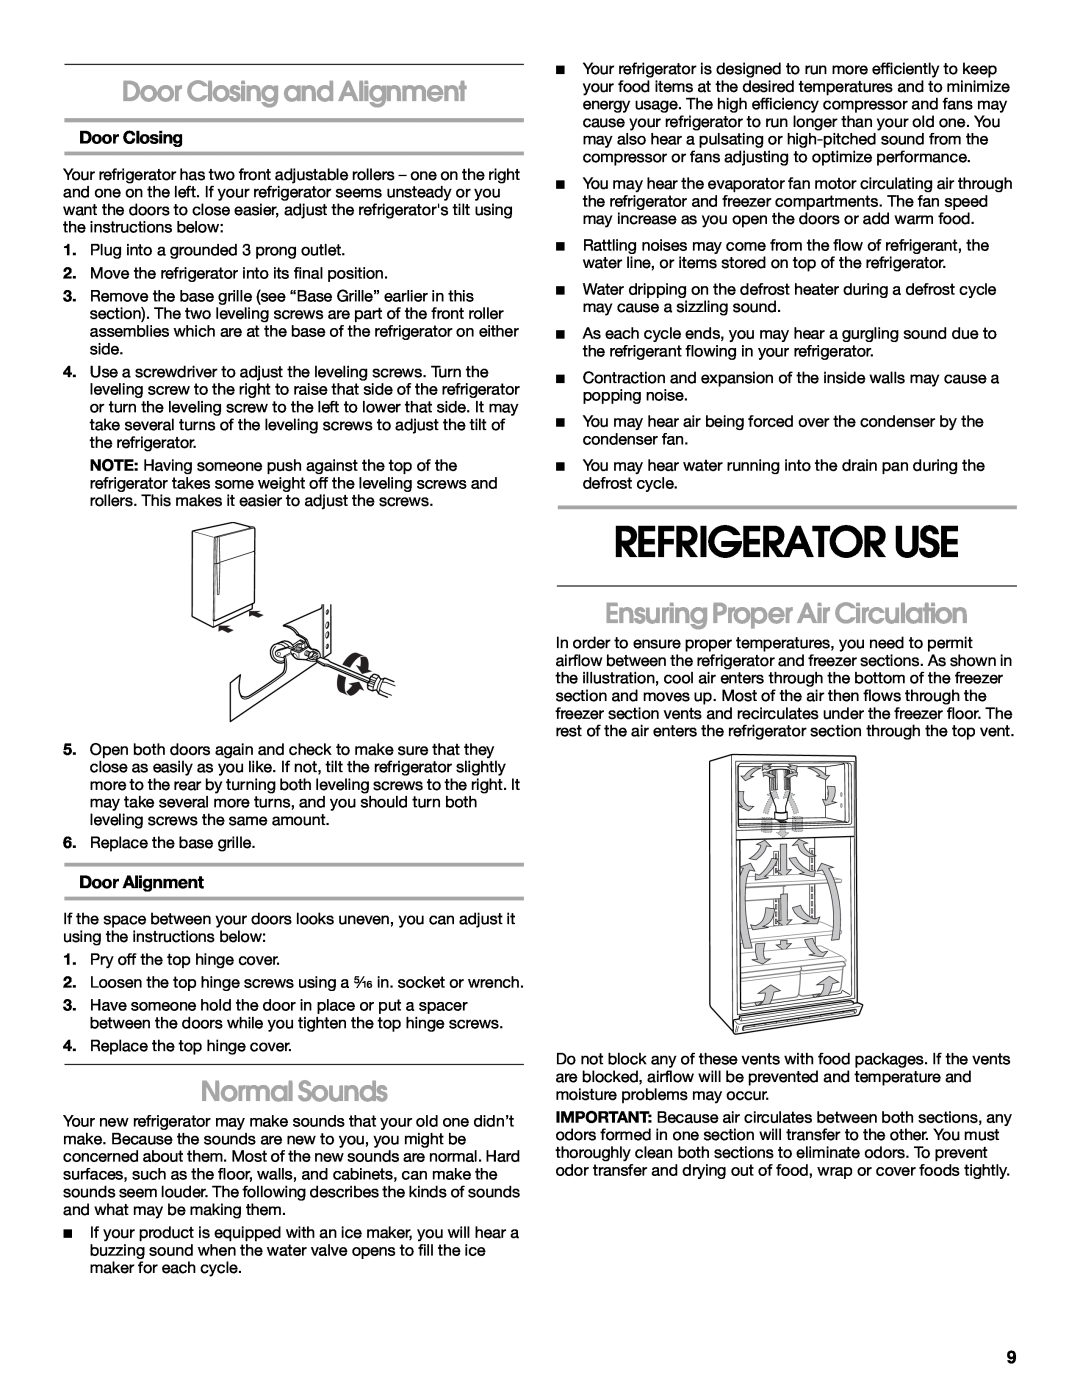 Whirlpool 2225405 manual Refrigerator Use, Door Closing and Alignment, Normal Sounds, Ensuring Proper Air Circulation 